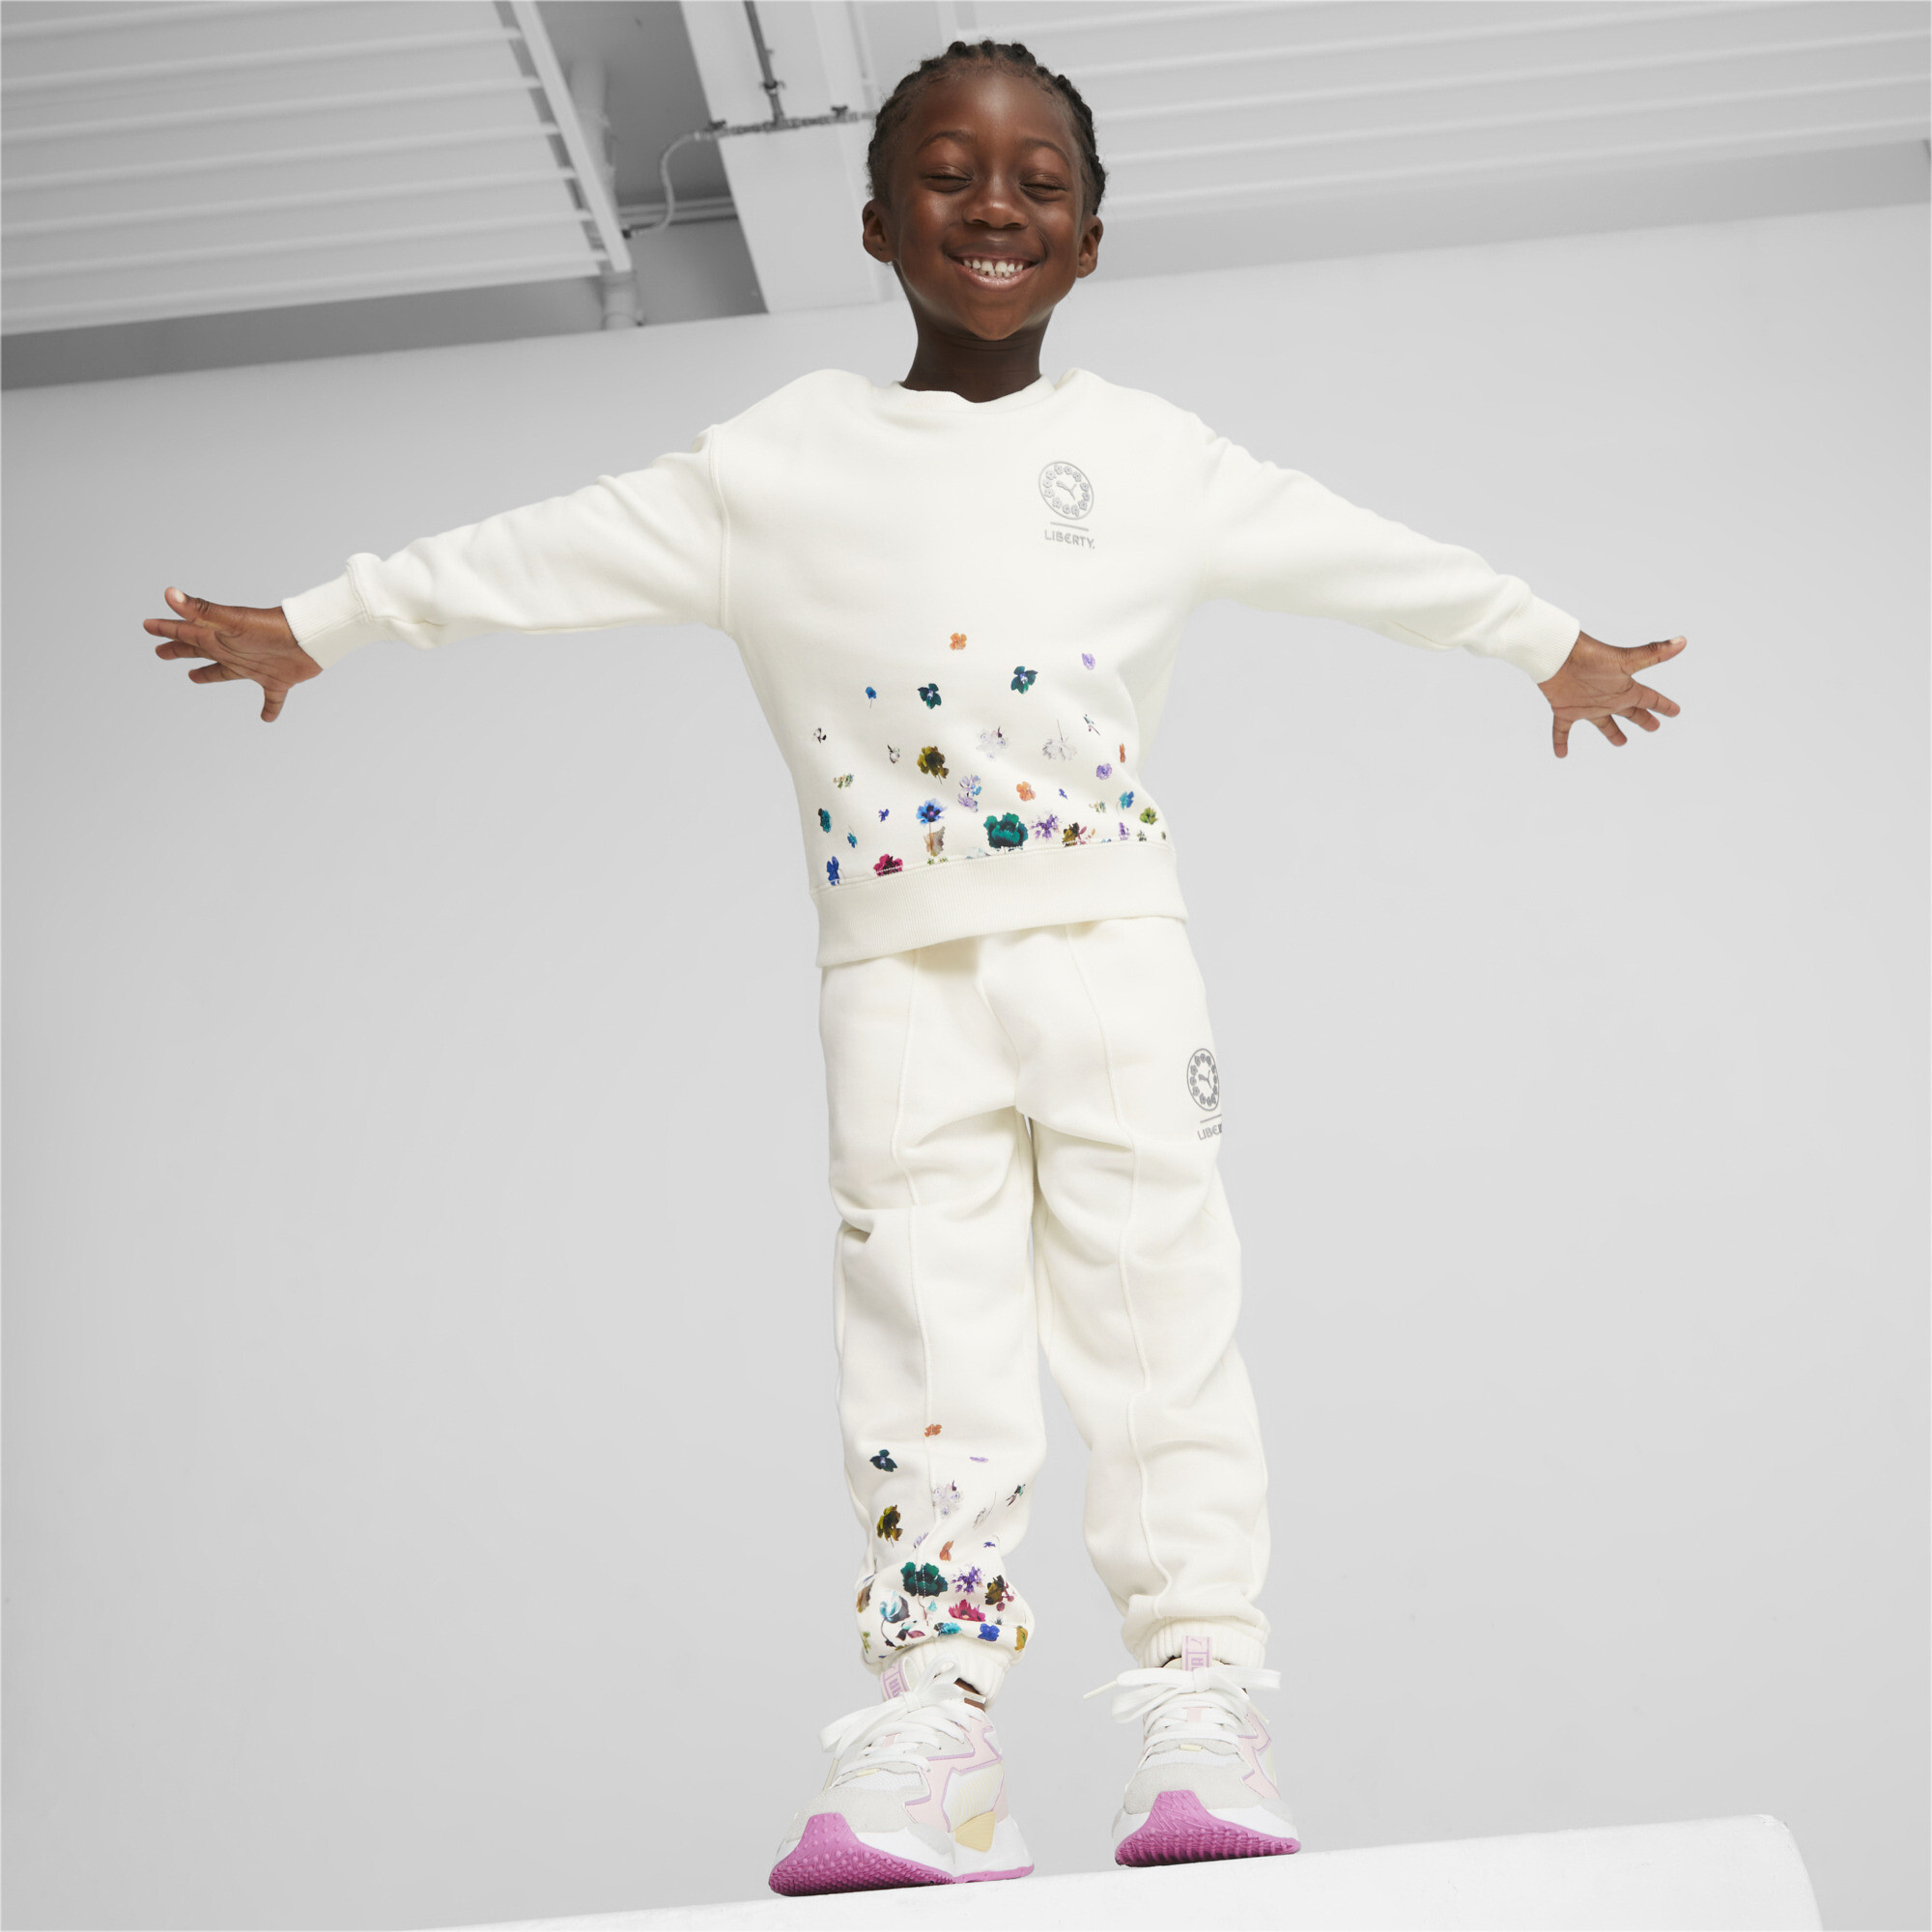 Kids' PUMA X LIBERTY Sweatpants In White, Size 2-3 Months